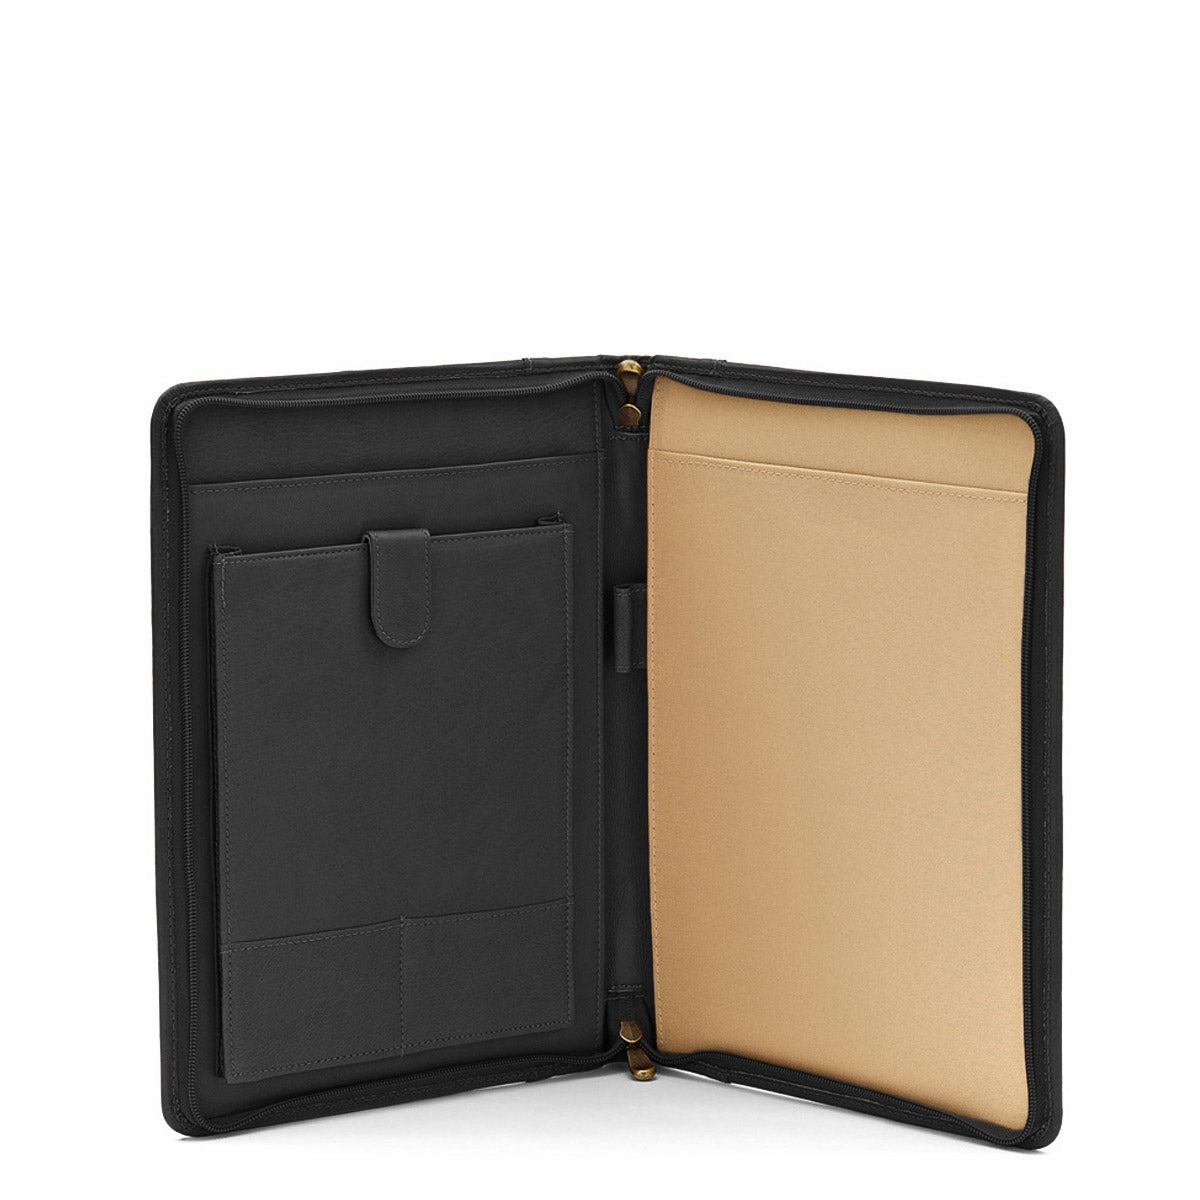 Hunt A4 Compendium with Tablet Pocket - Black